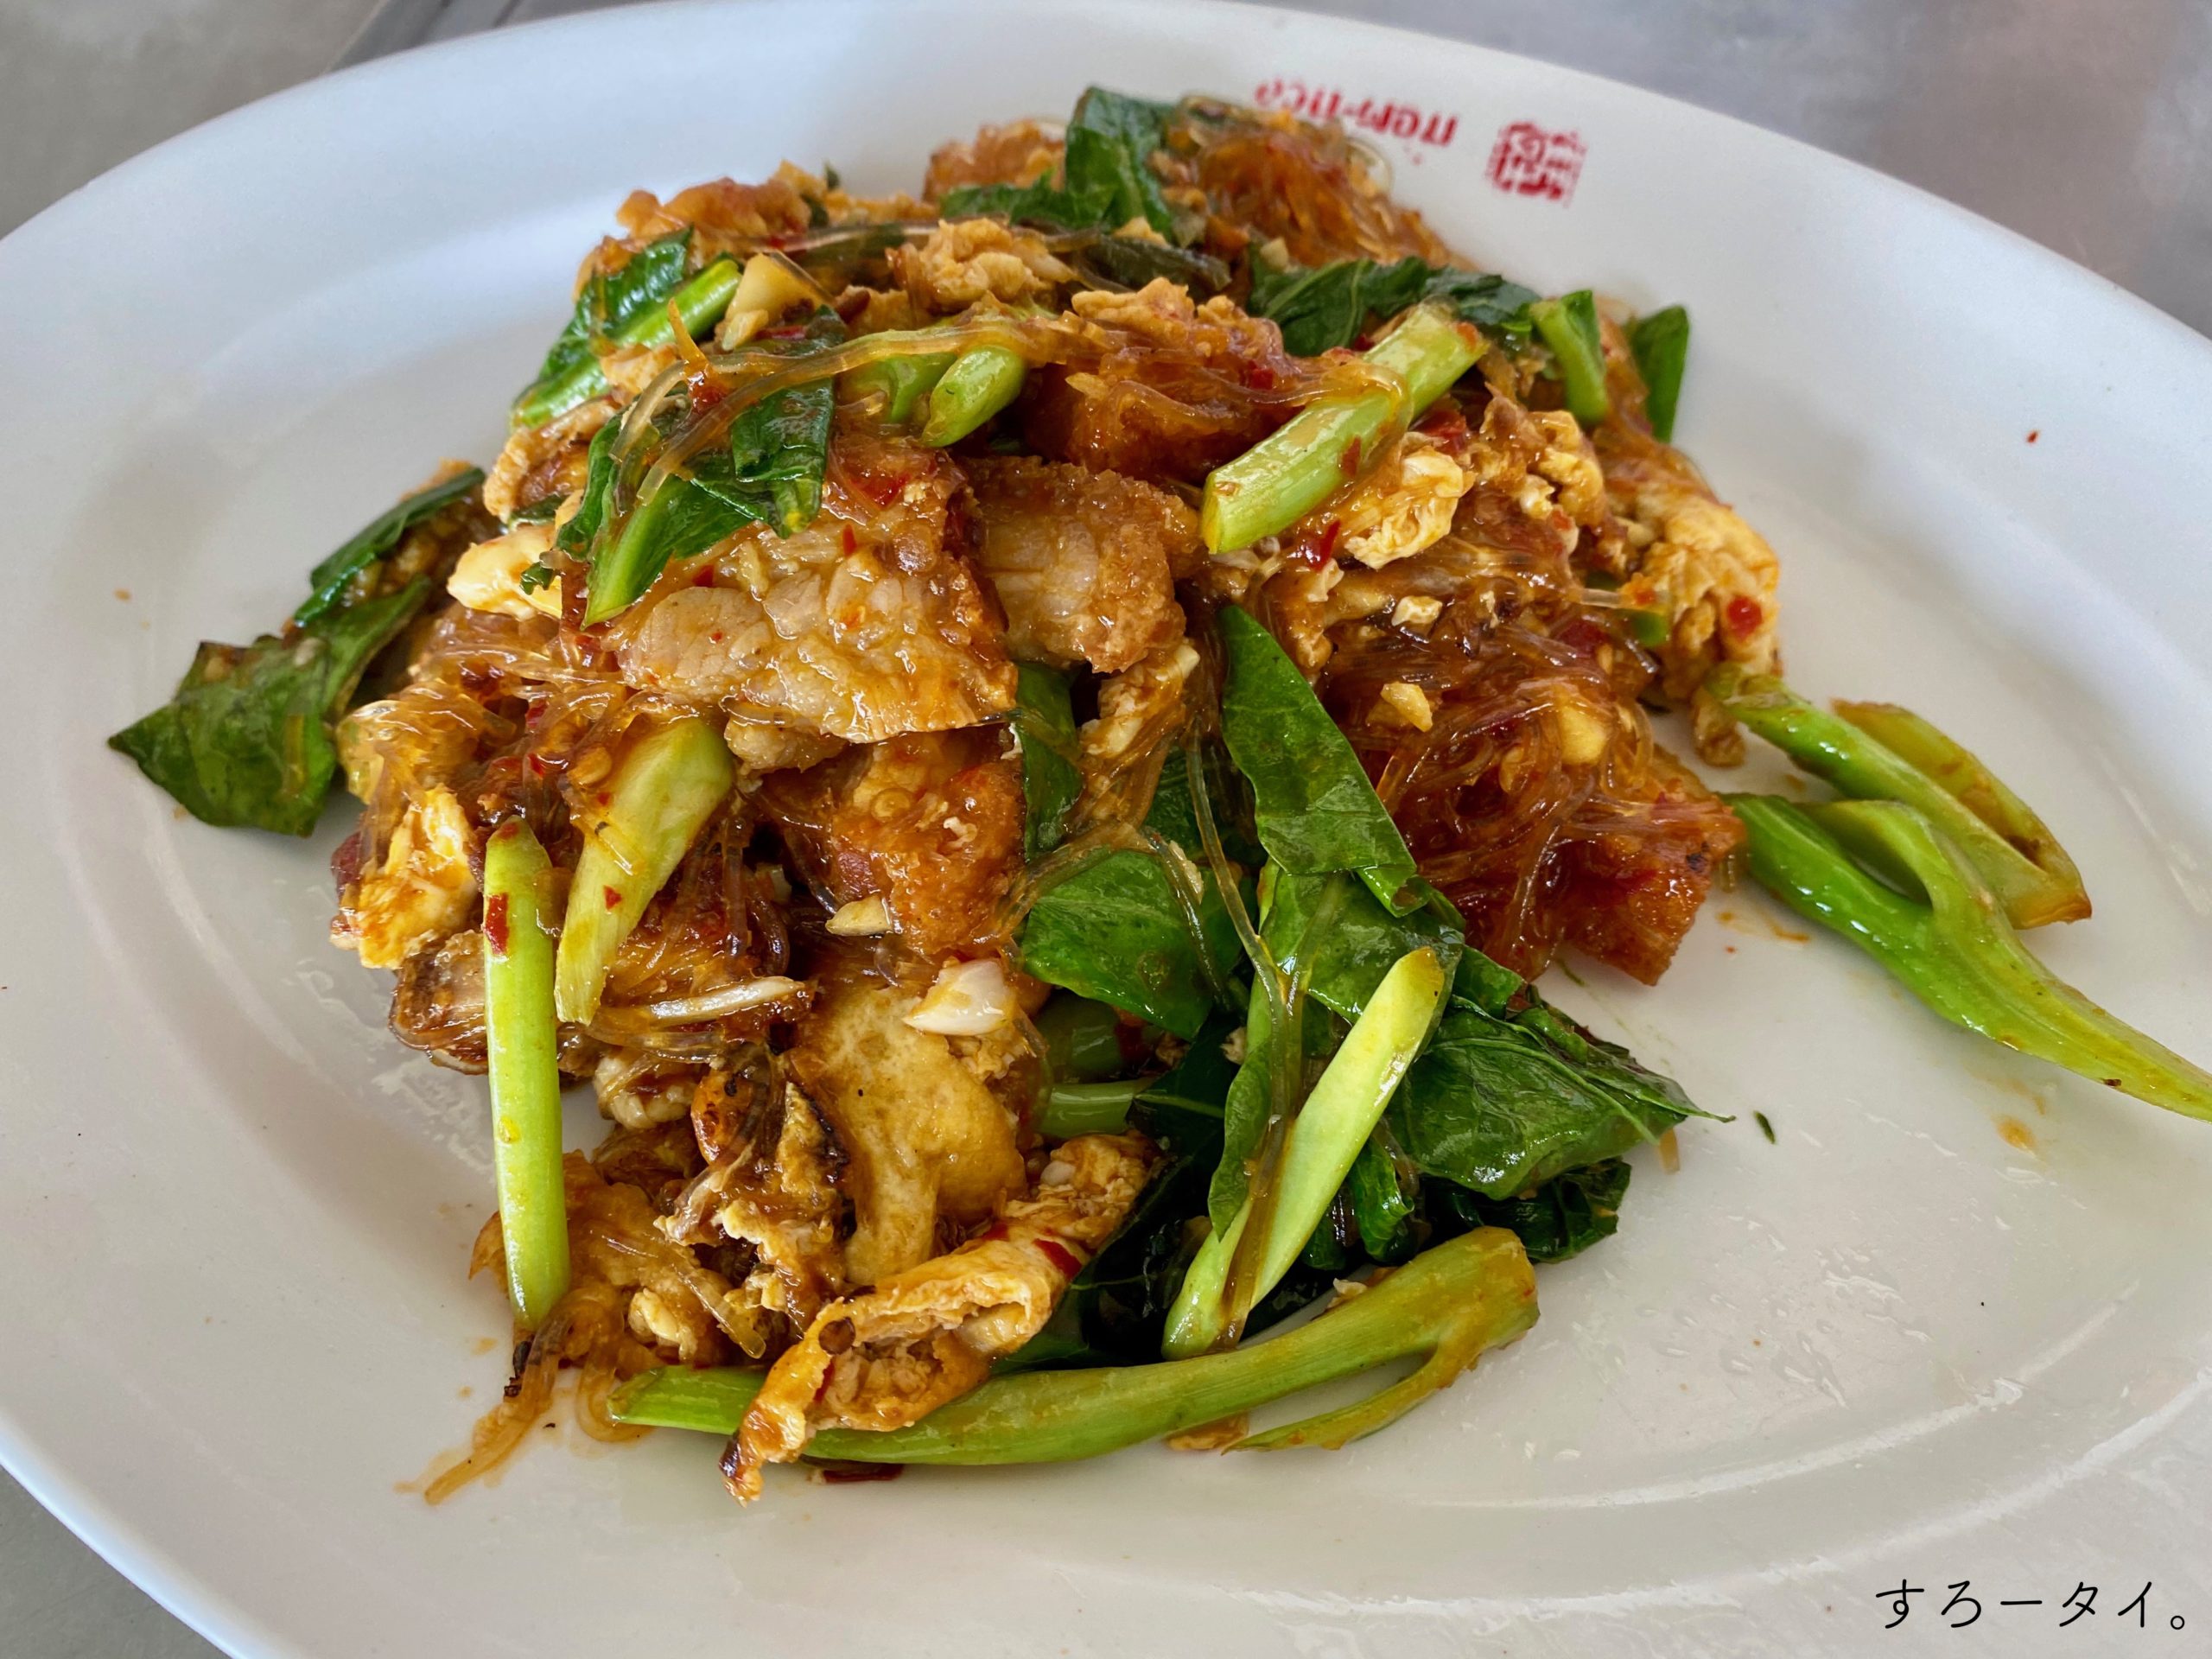 Uan Phom　อ้วนผอม